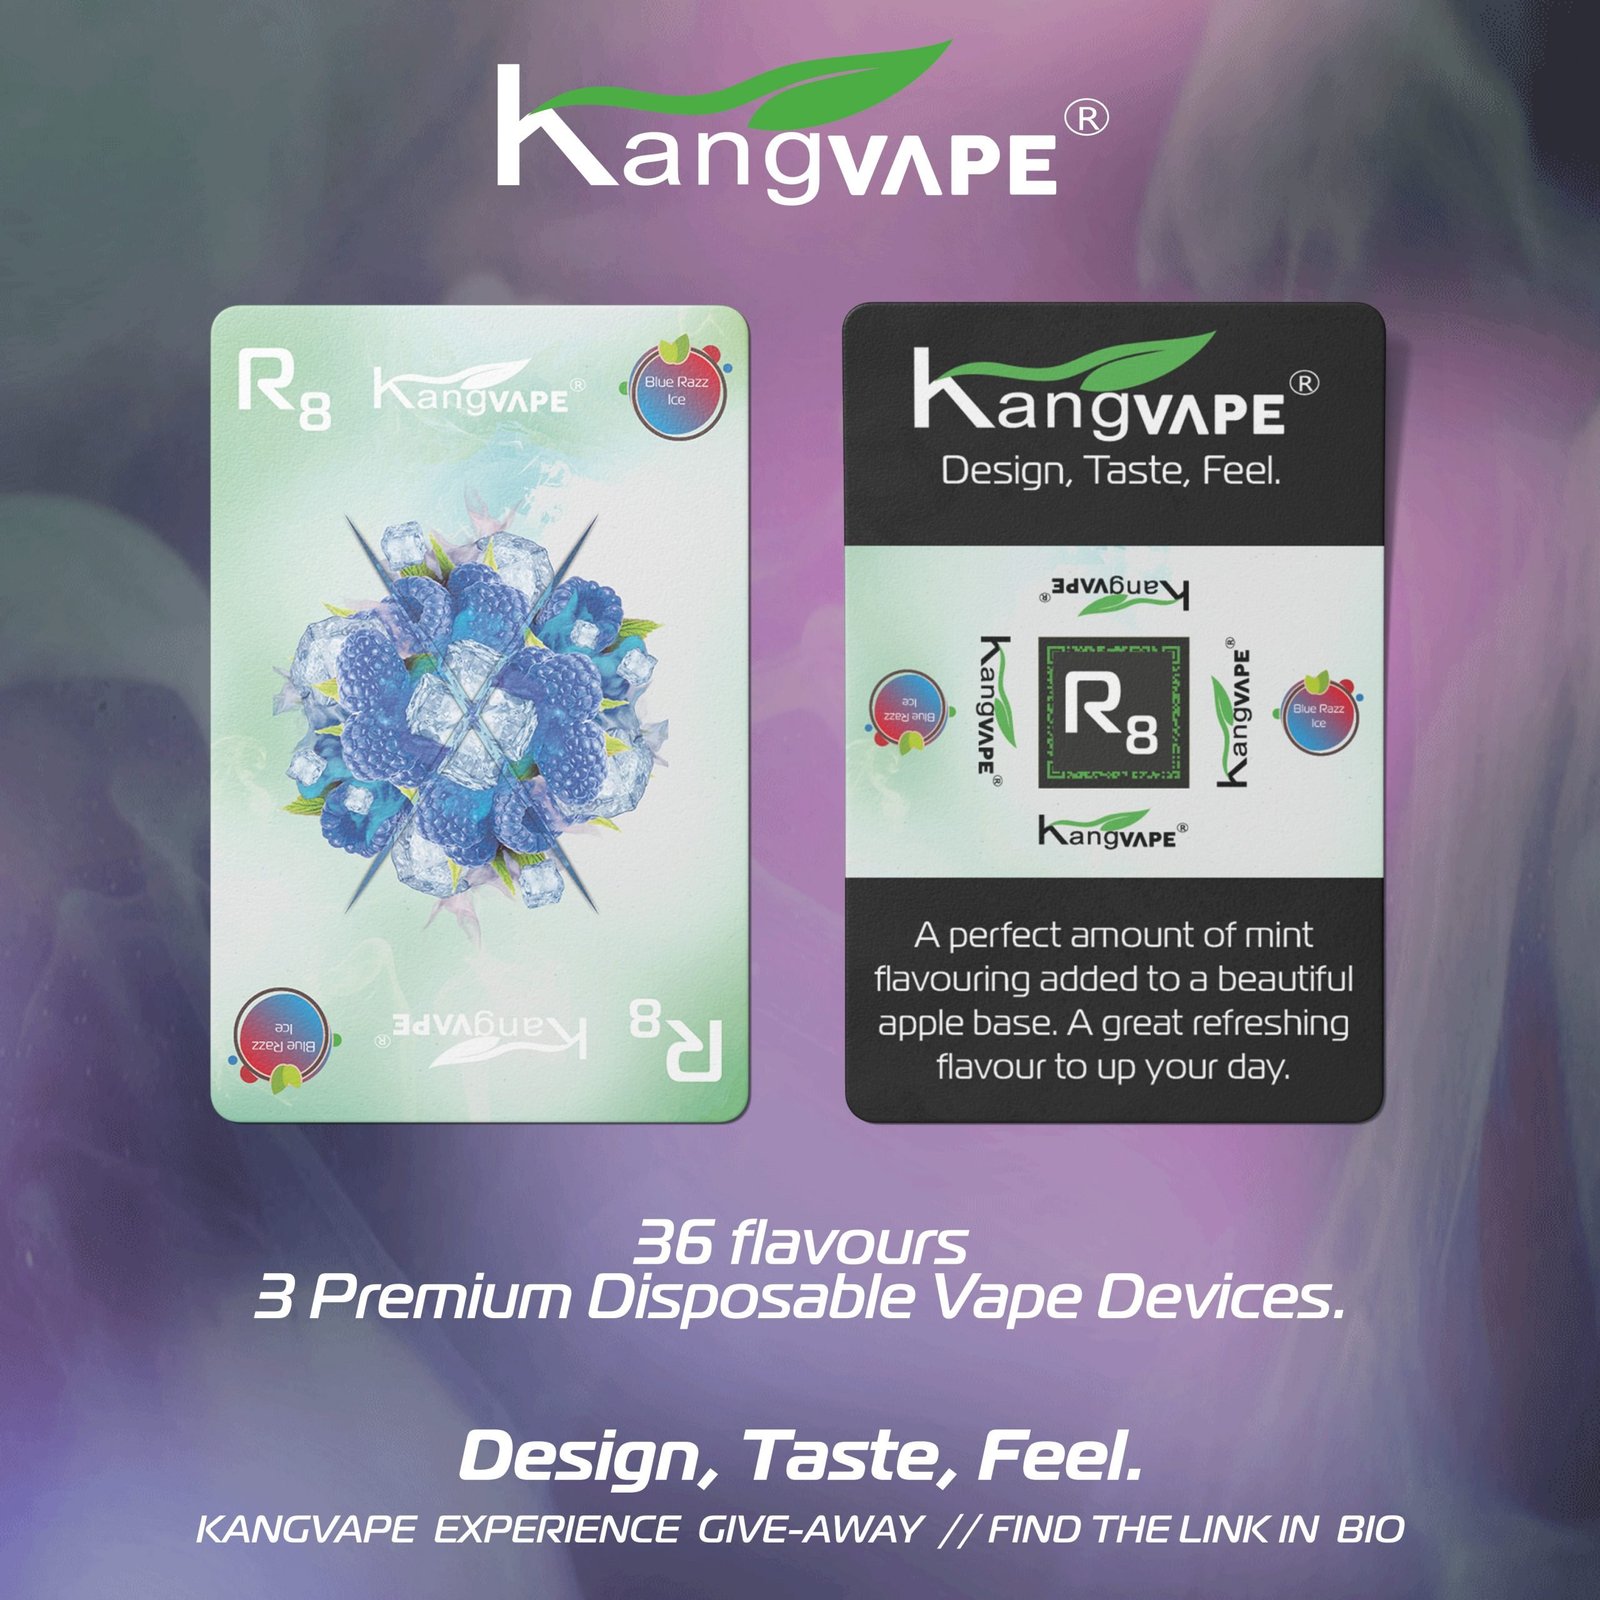 KangVAPE August Social Media Flavour Cards